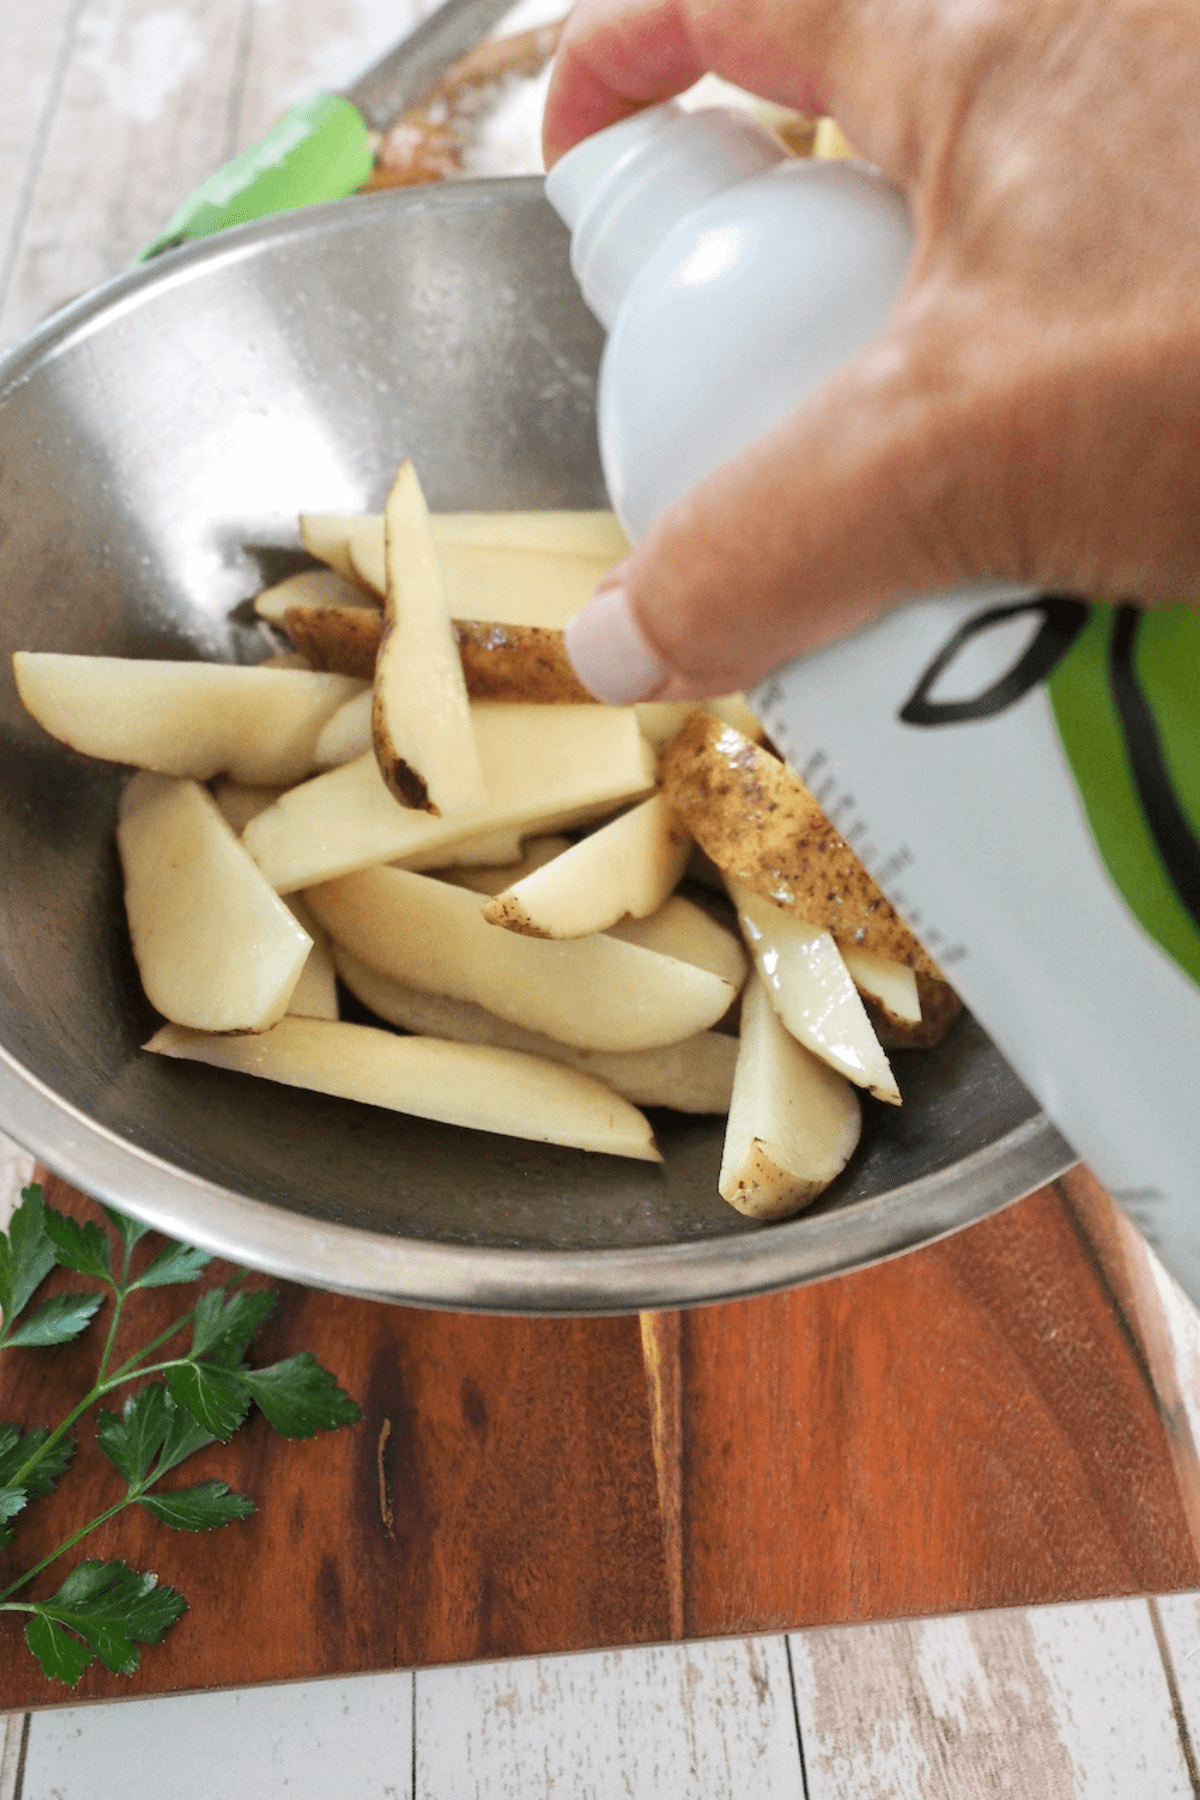 Spraying fries with avocado oil. 